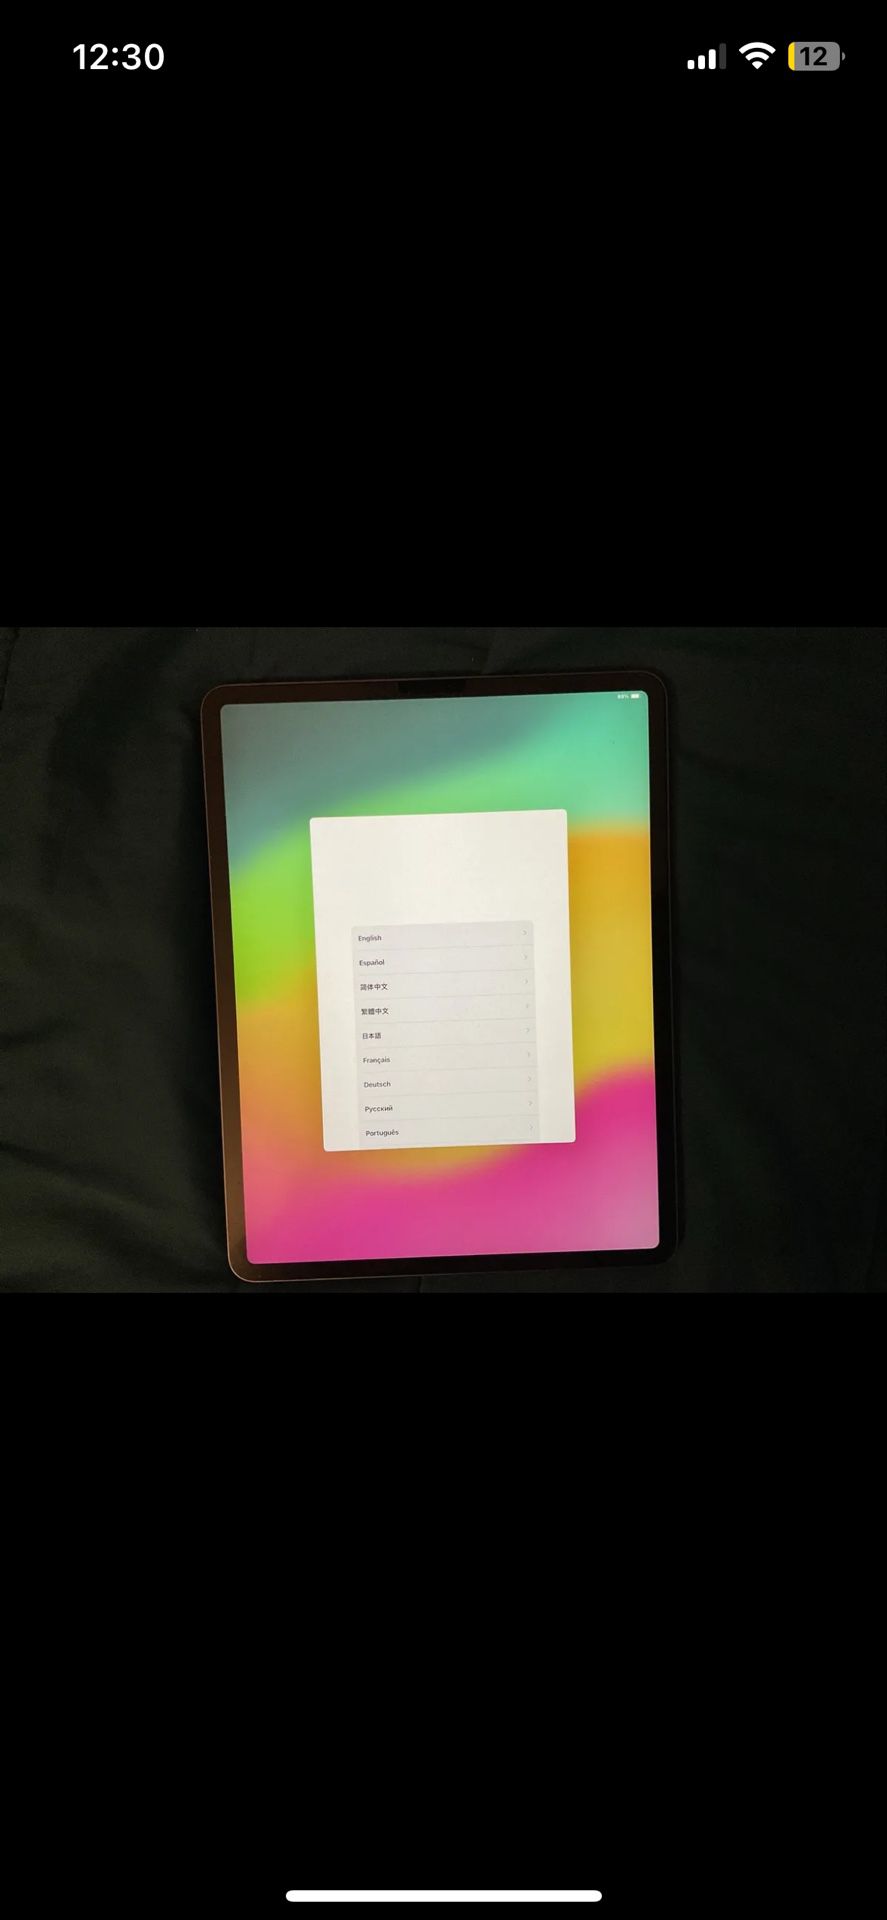 Apple iPad Pro 4th Gen. 128GB, Wi-Fi, 12.9 in - Space Gray